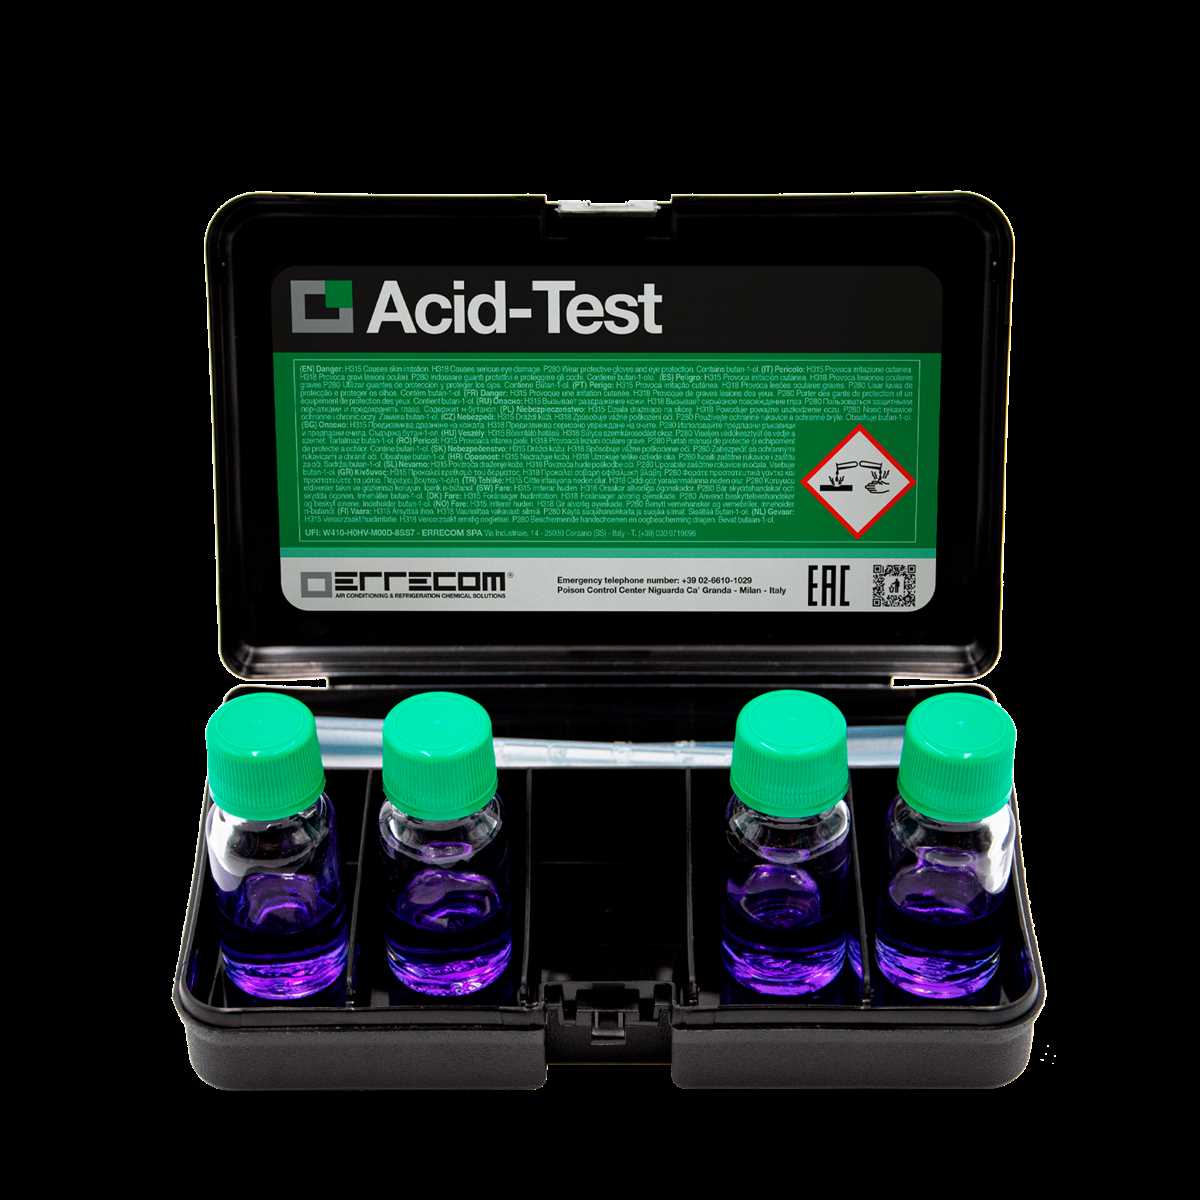 The Hydrochloric Acid Test